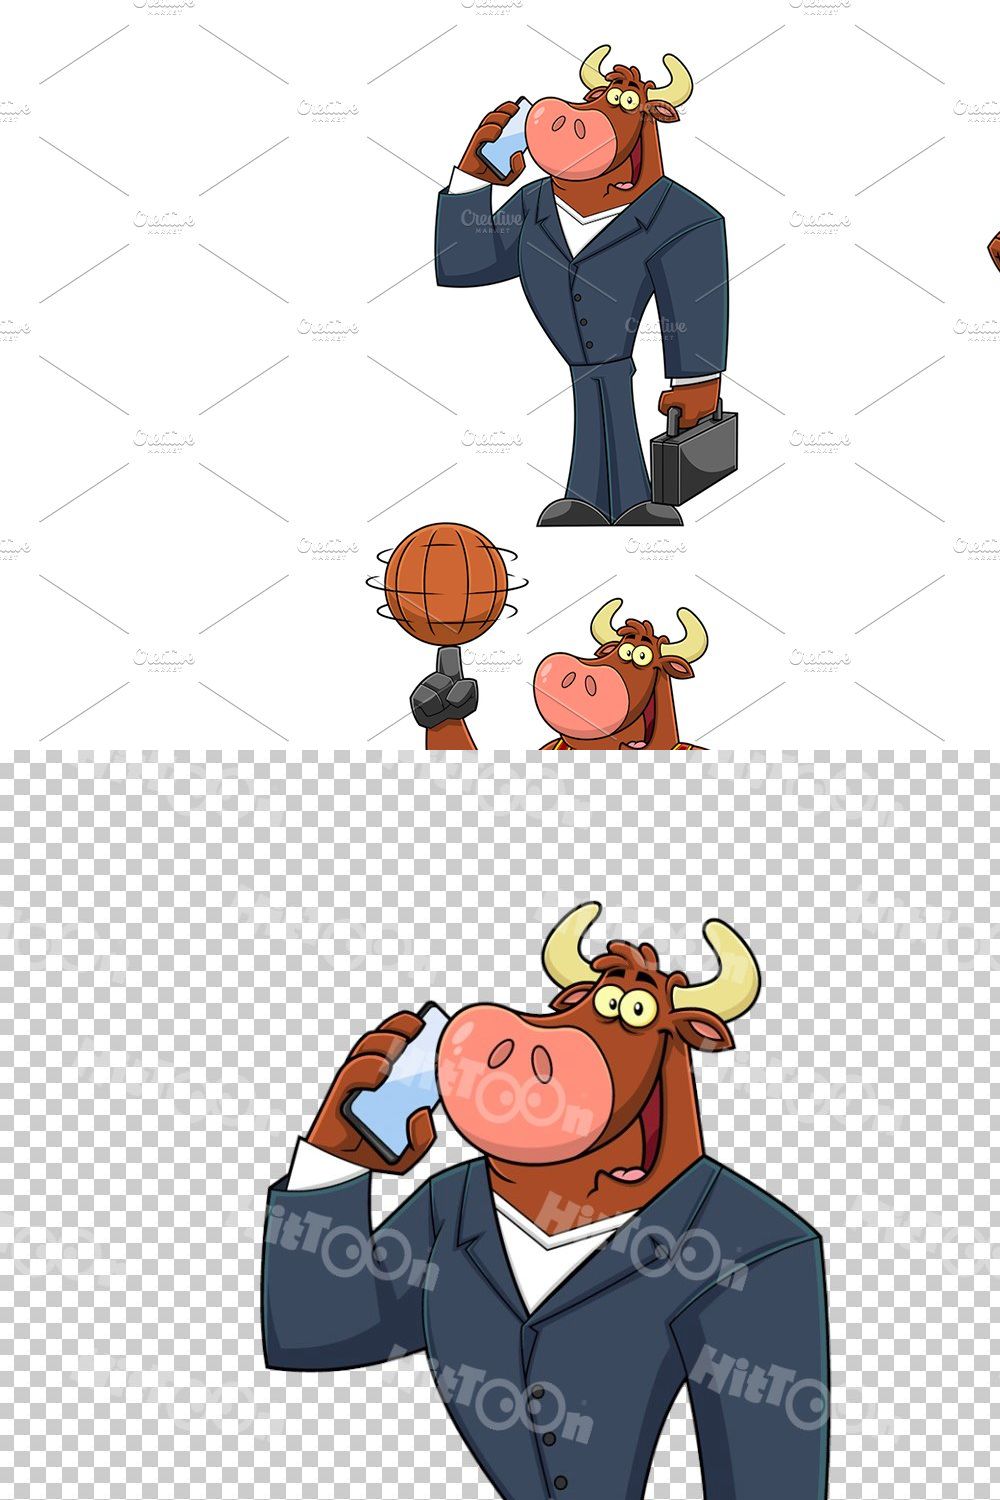 Bull Cartoon Mascot Character 1 pinterest preview image.